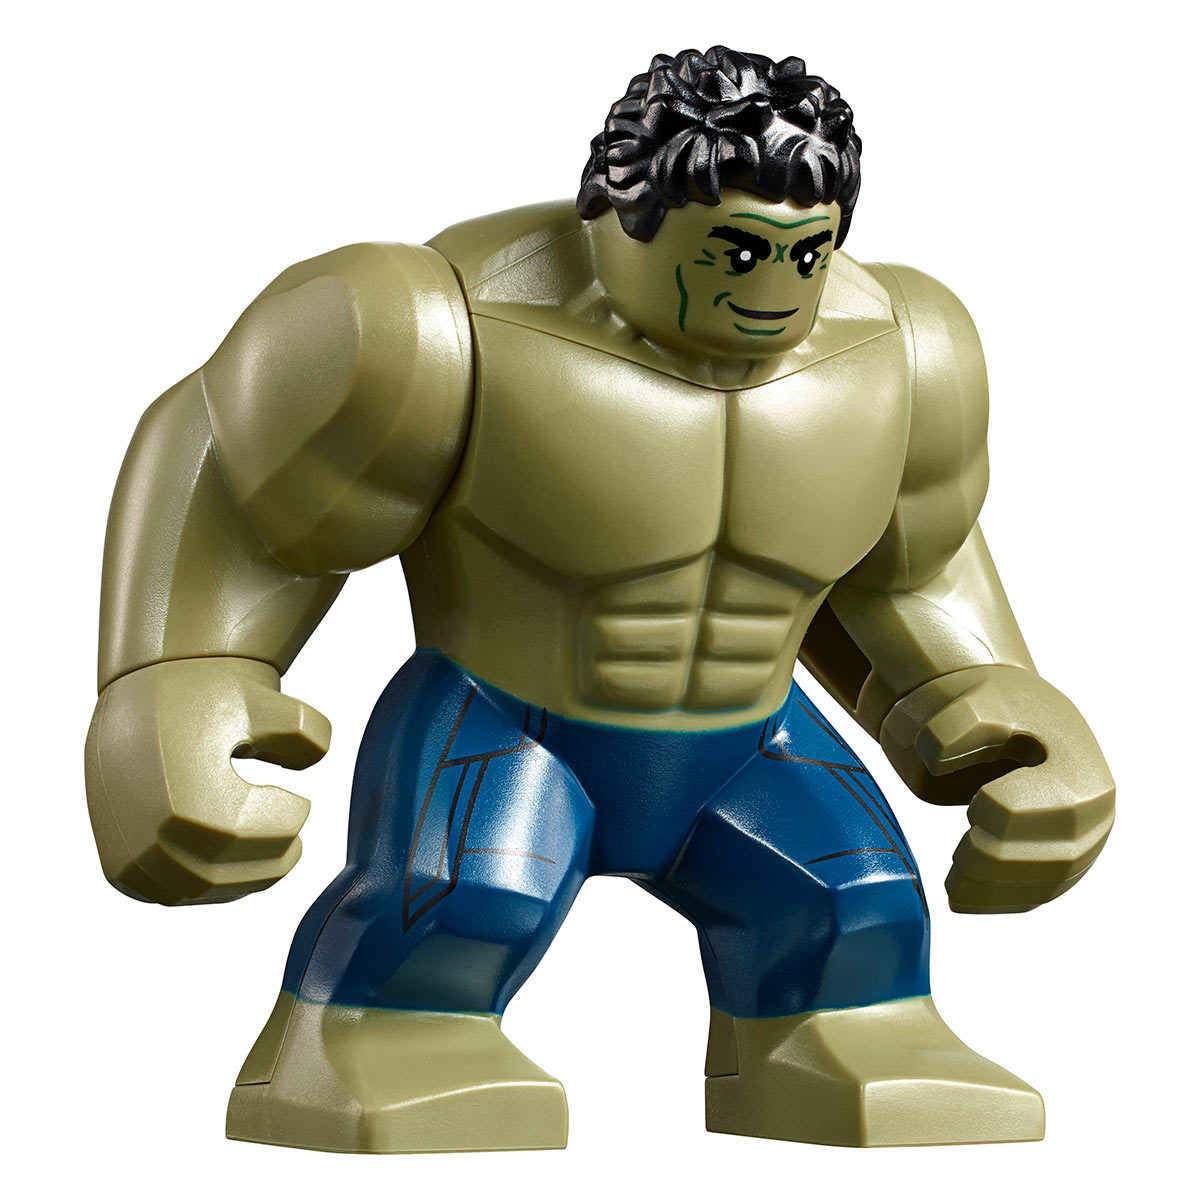 Lego Avengers compound hulk minifigure